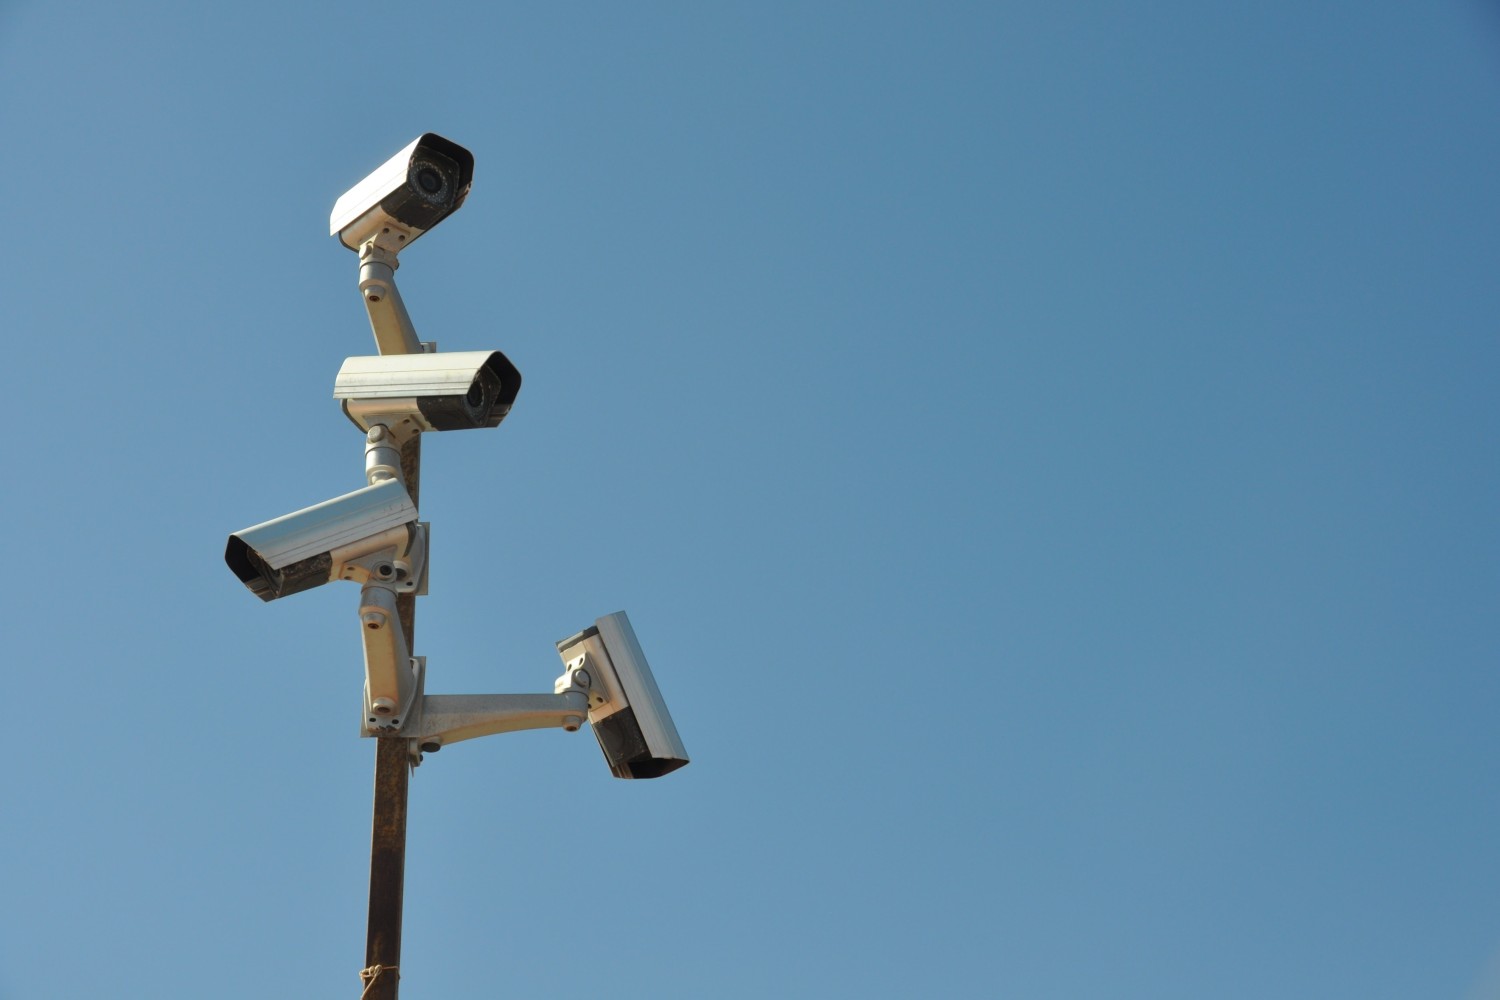  surveillance cameras on a metal post